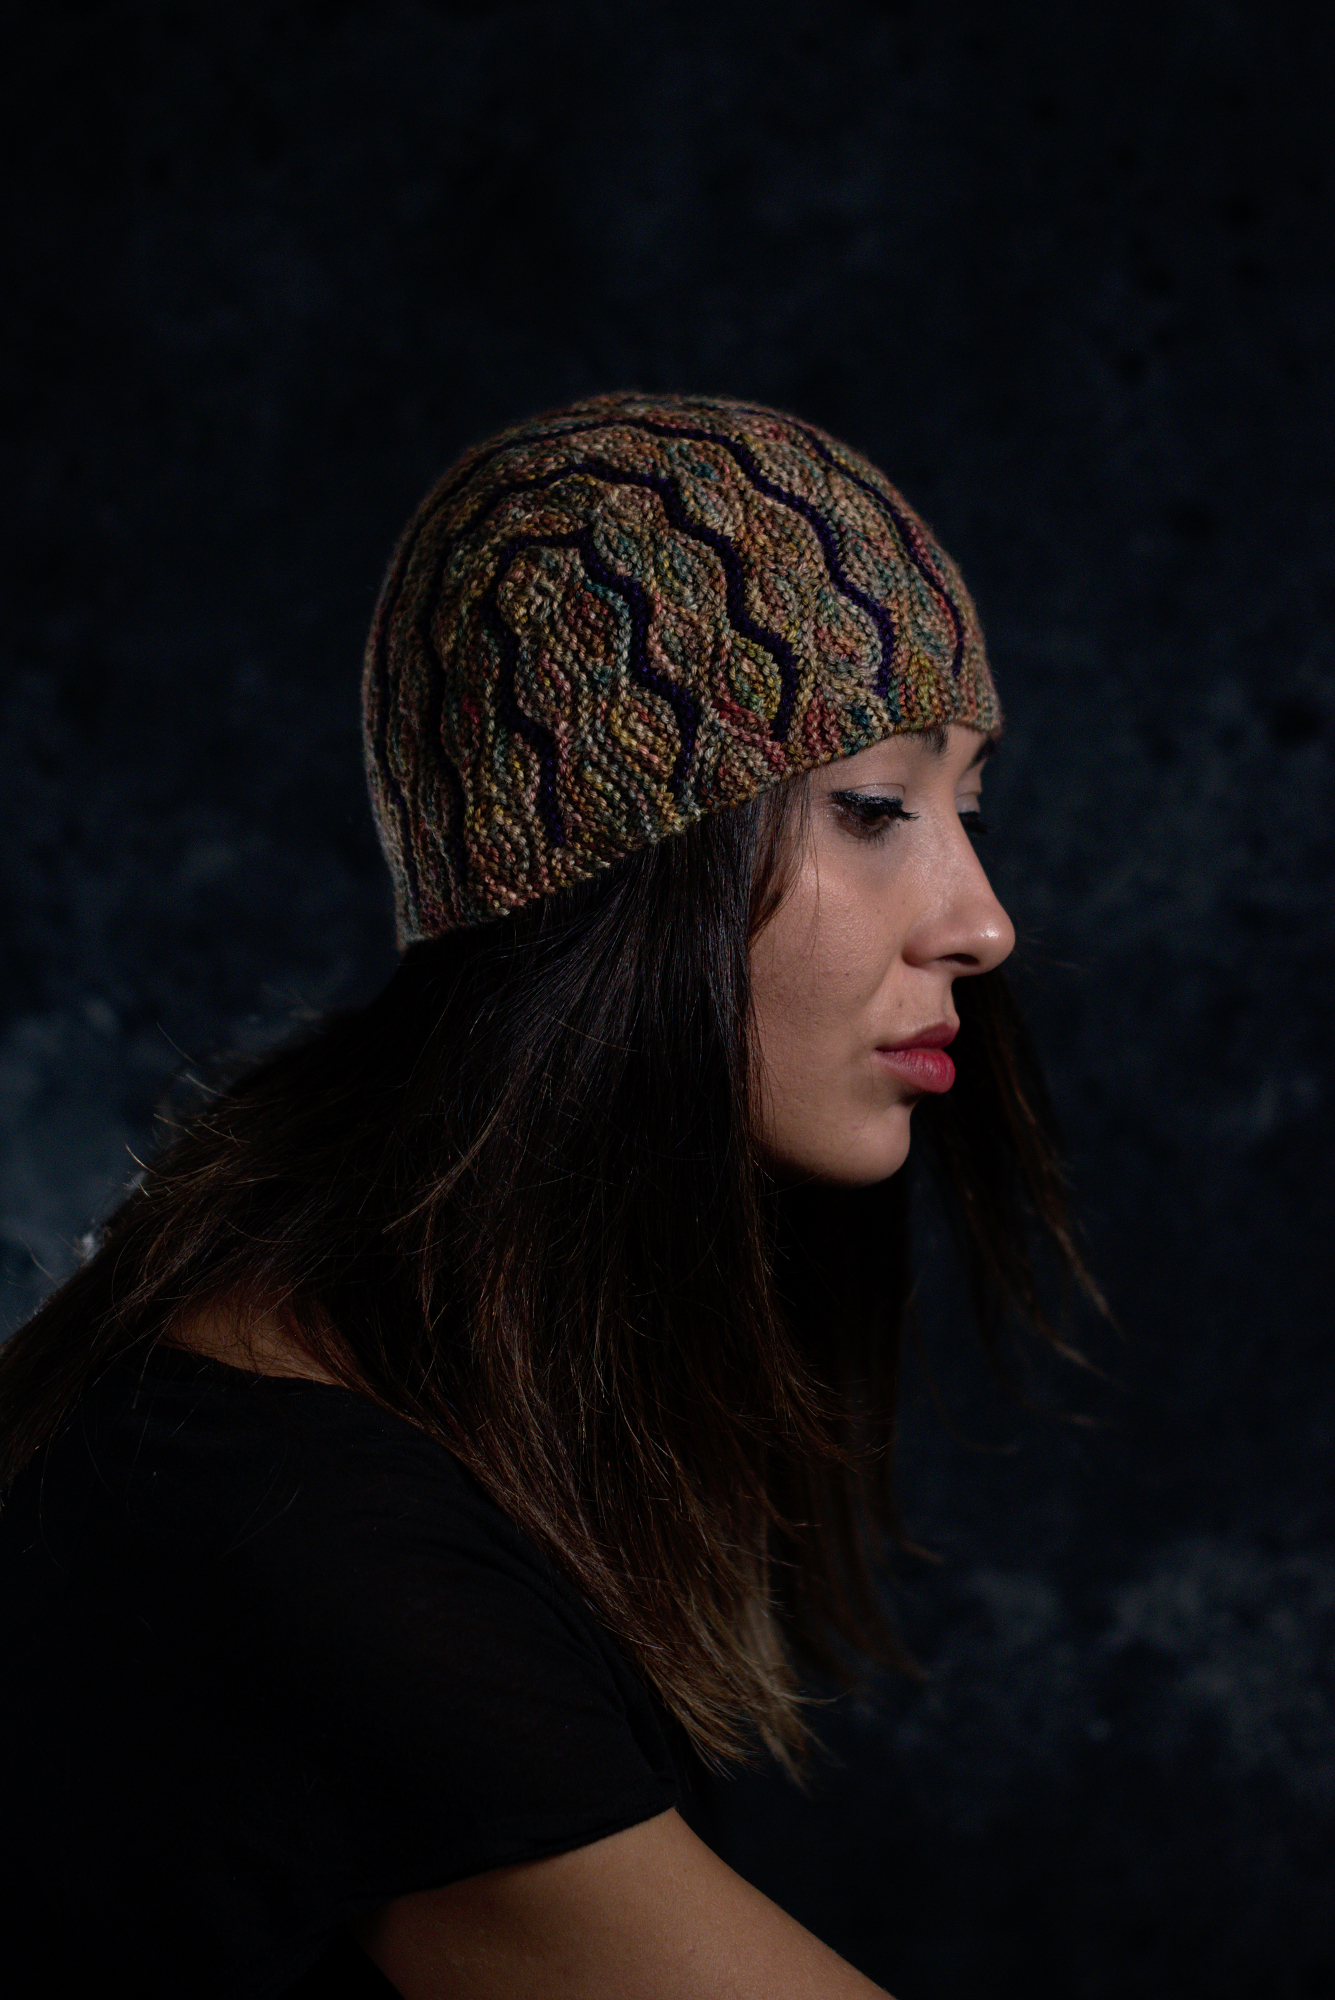 Undulous sideways knit short row colourwork hat knitting pattern